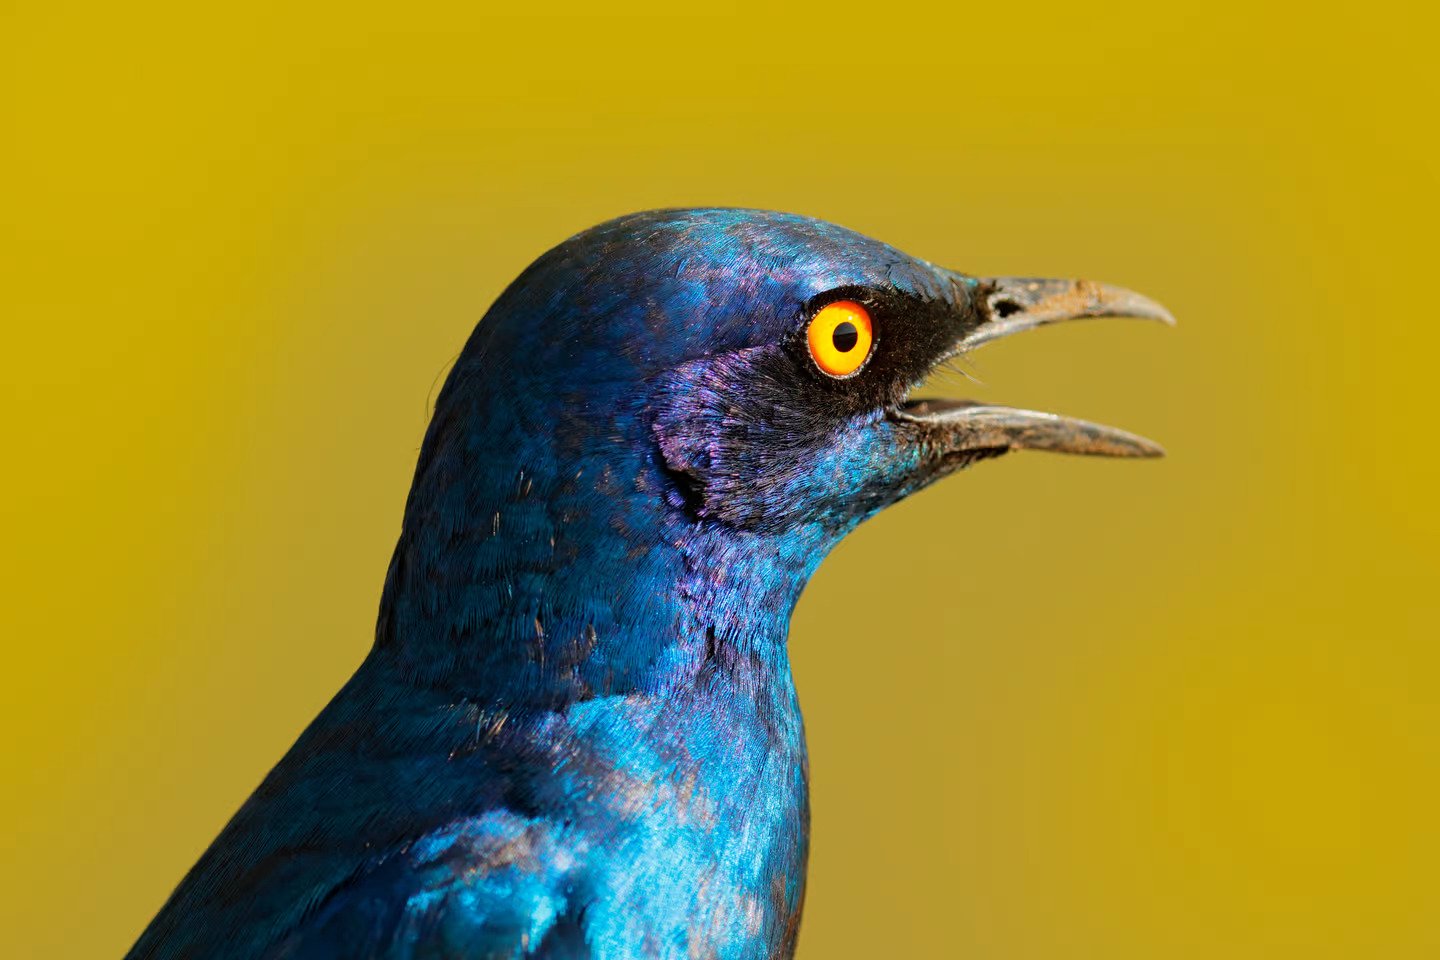 Human Vs Bird Color Perception - The Secrets Are Revealed